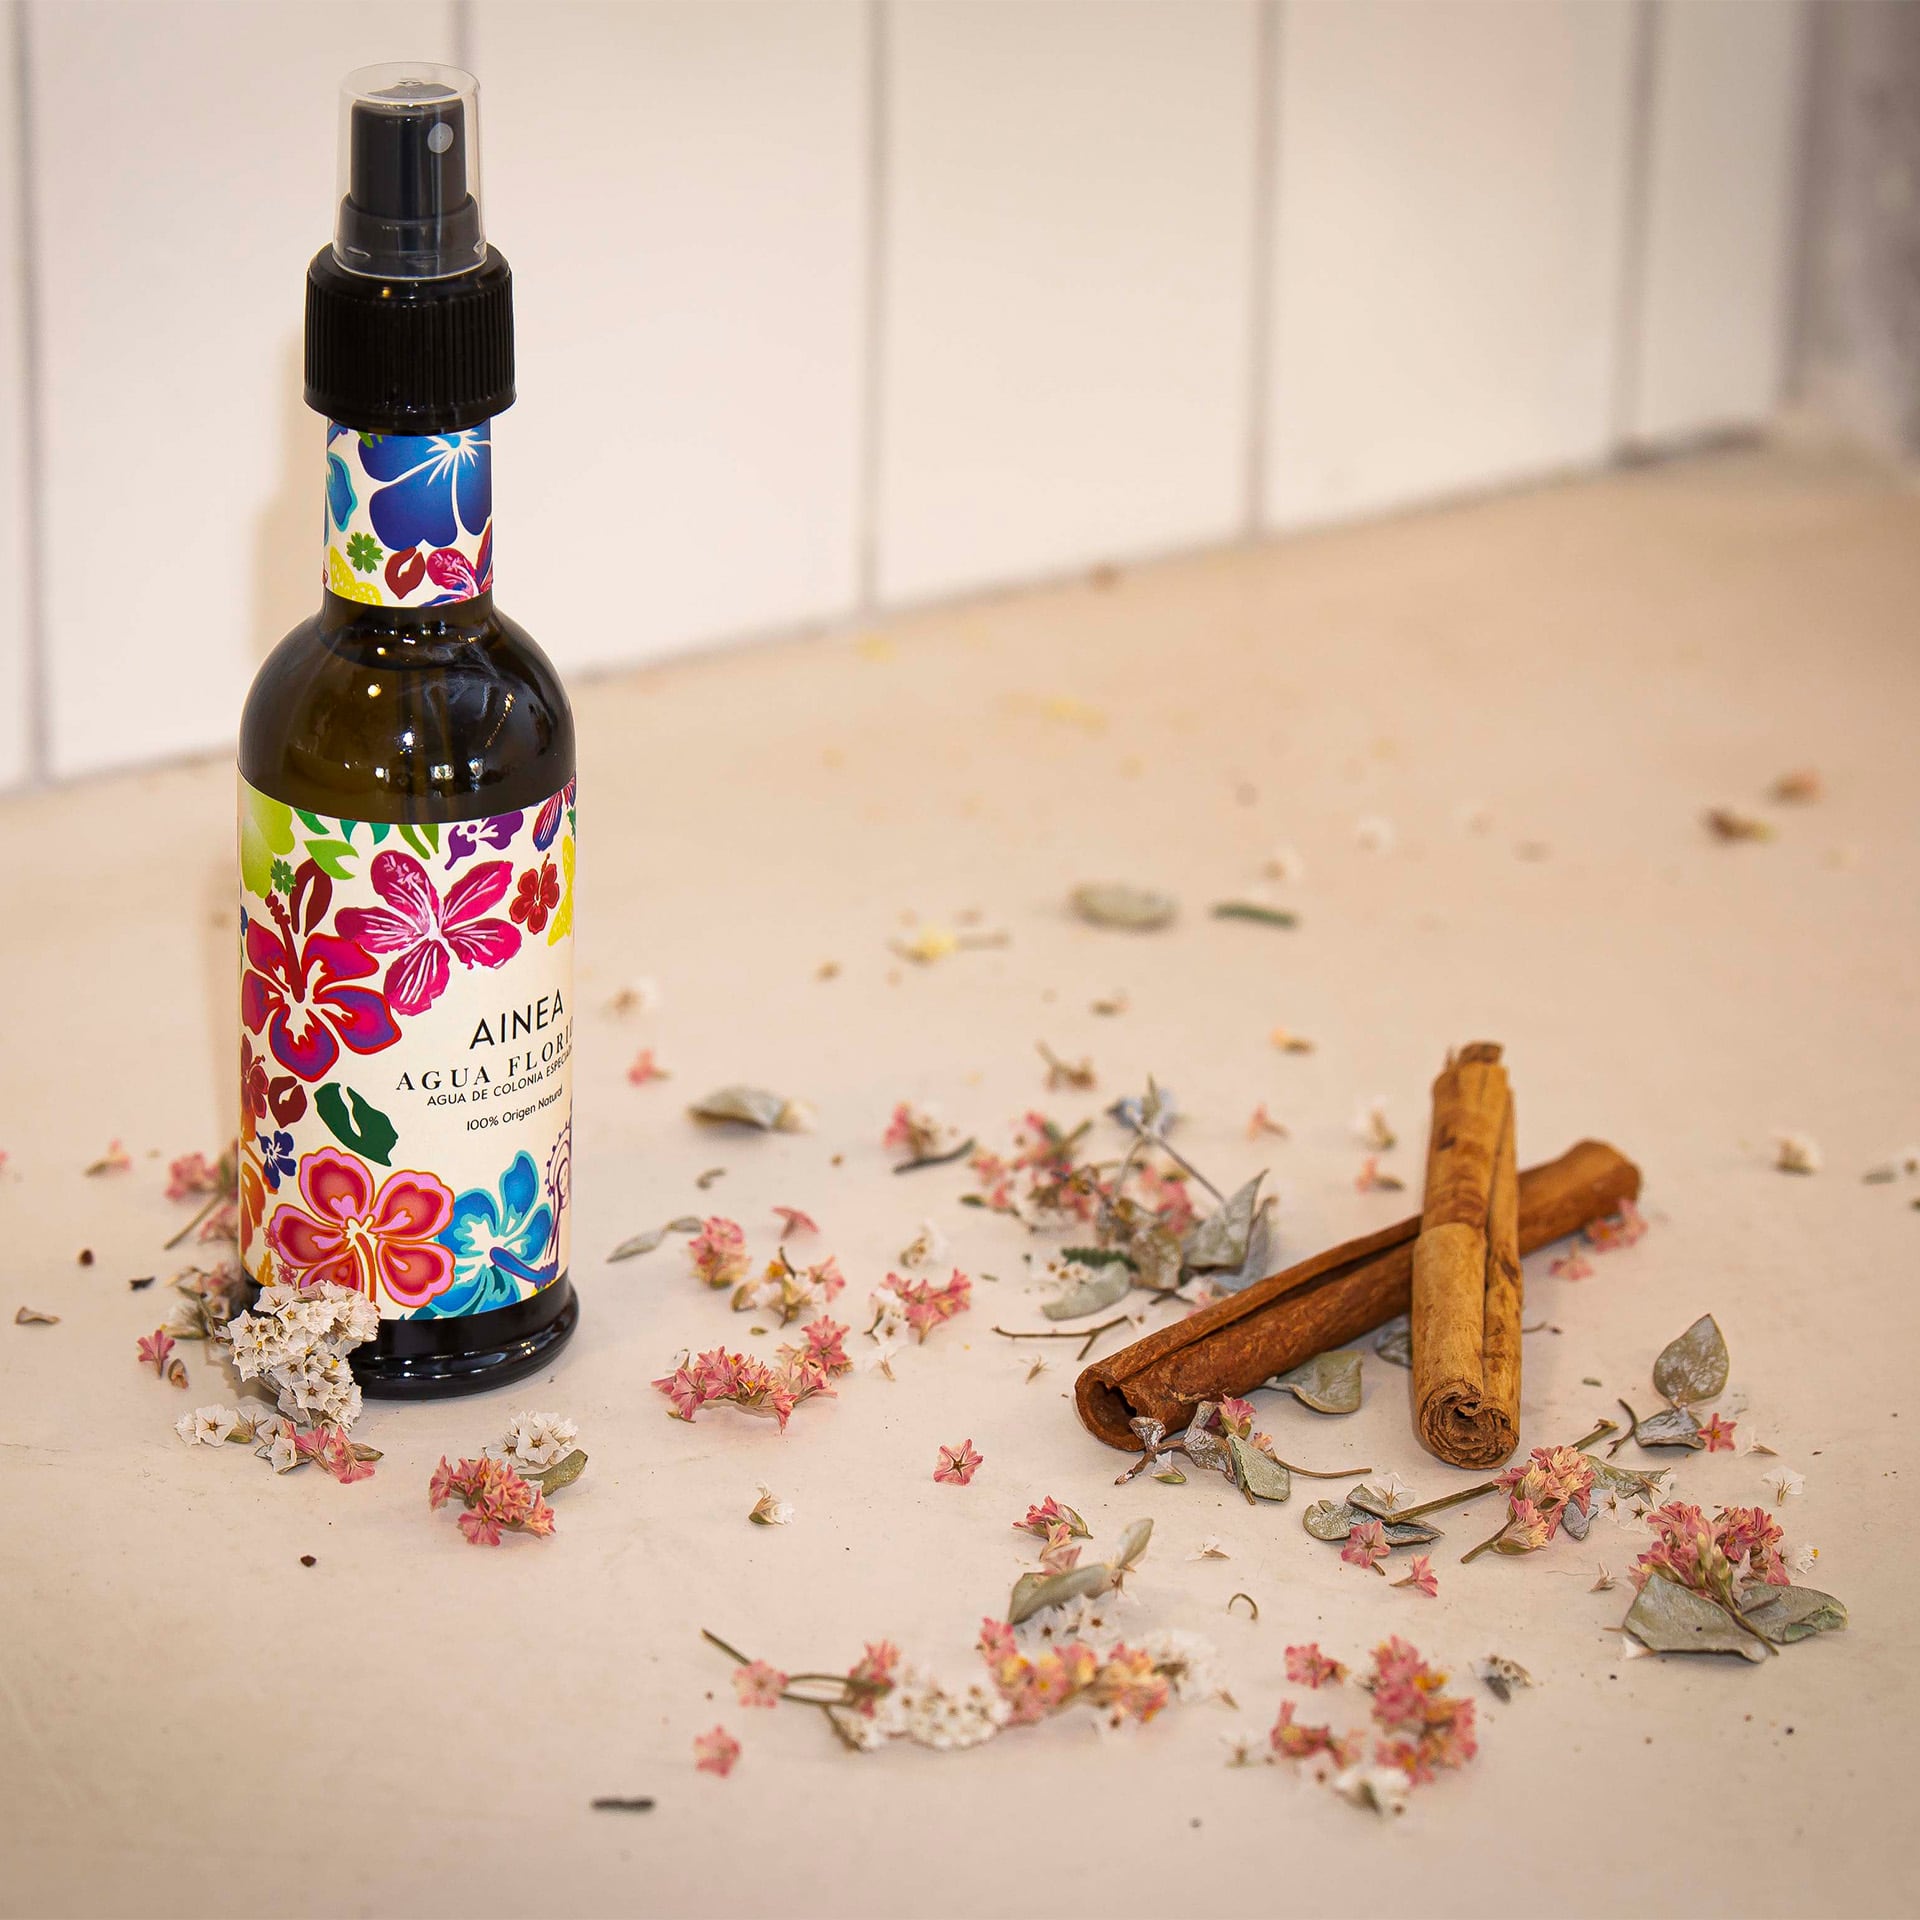 Imagen hecha desde arriba del Agua Florida 100 ml de Ainea Perfums con flores y ramas de canela como atrezzo.